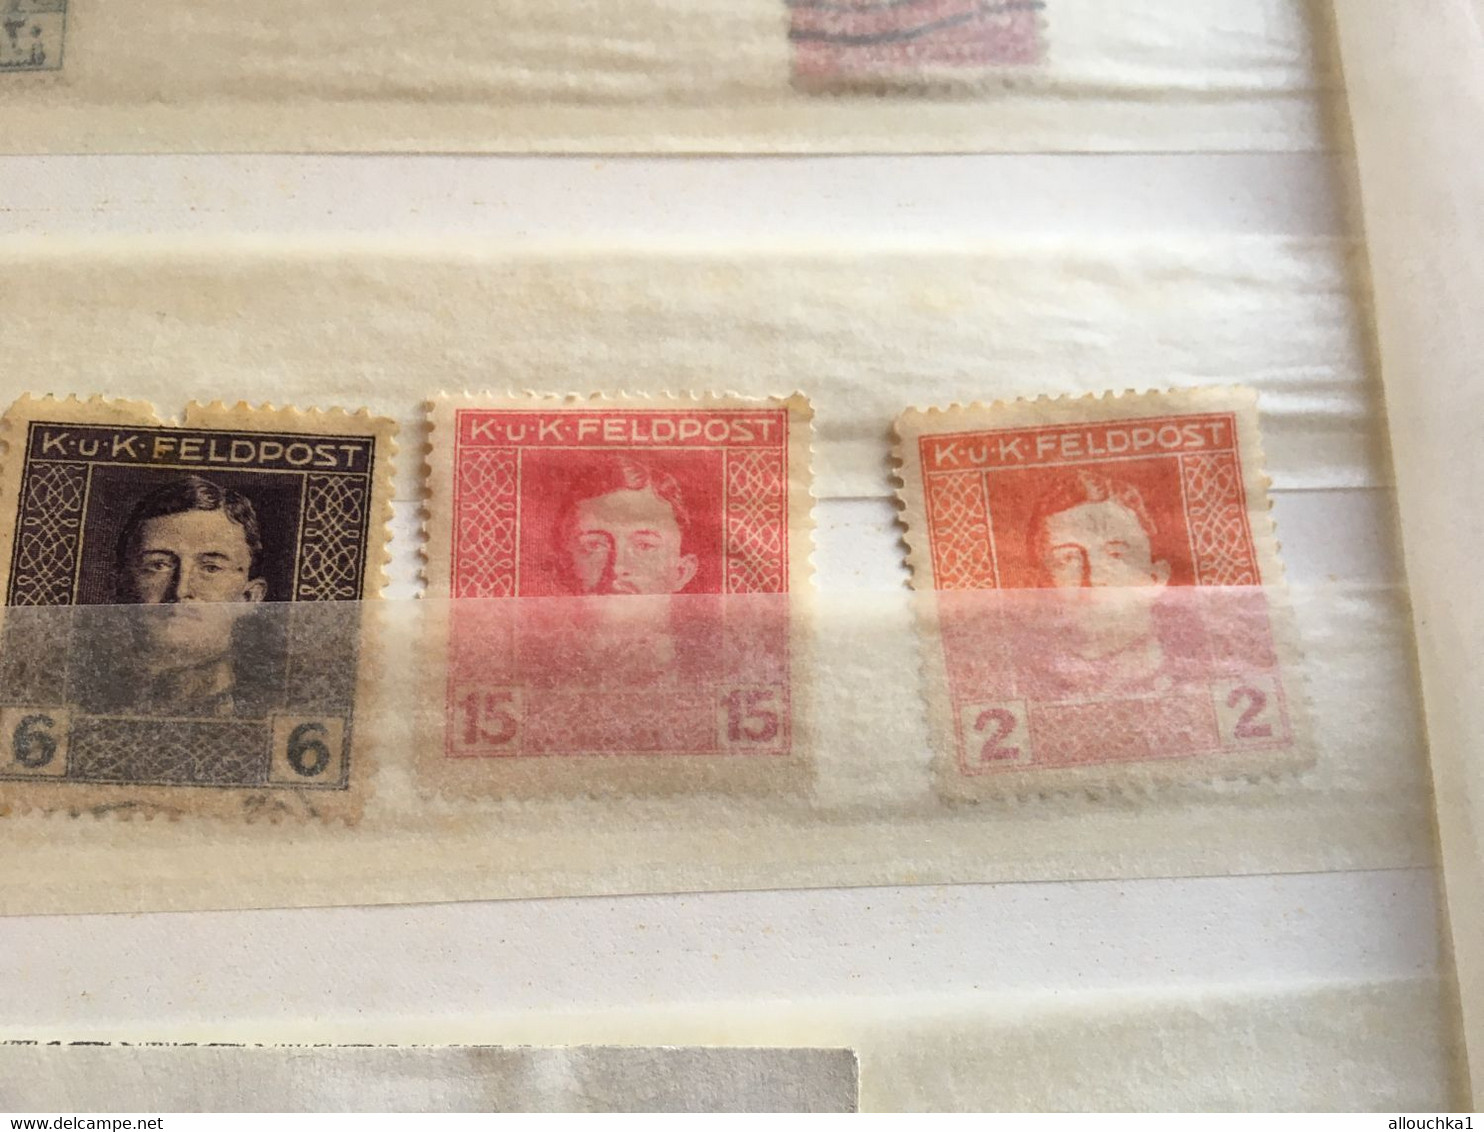 19 Timbres-☛3 Helvetia NSG-☛Iraq-☛-2 USA- série 6 Stamps * K.u.K Feldpost 1 Timbre touché-Mali-3 UK-Guinée-Magyar-Grèce